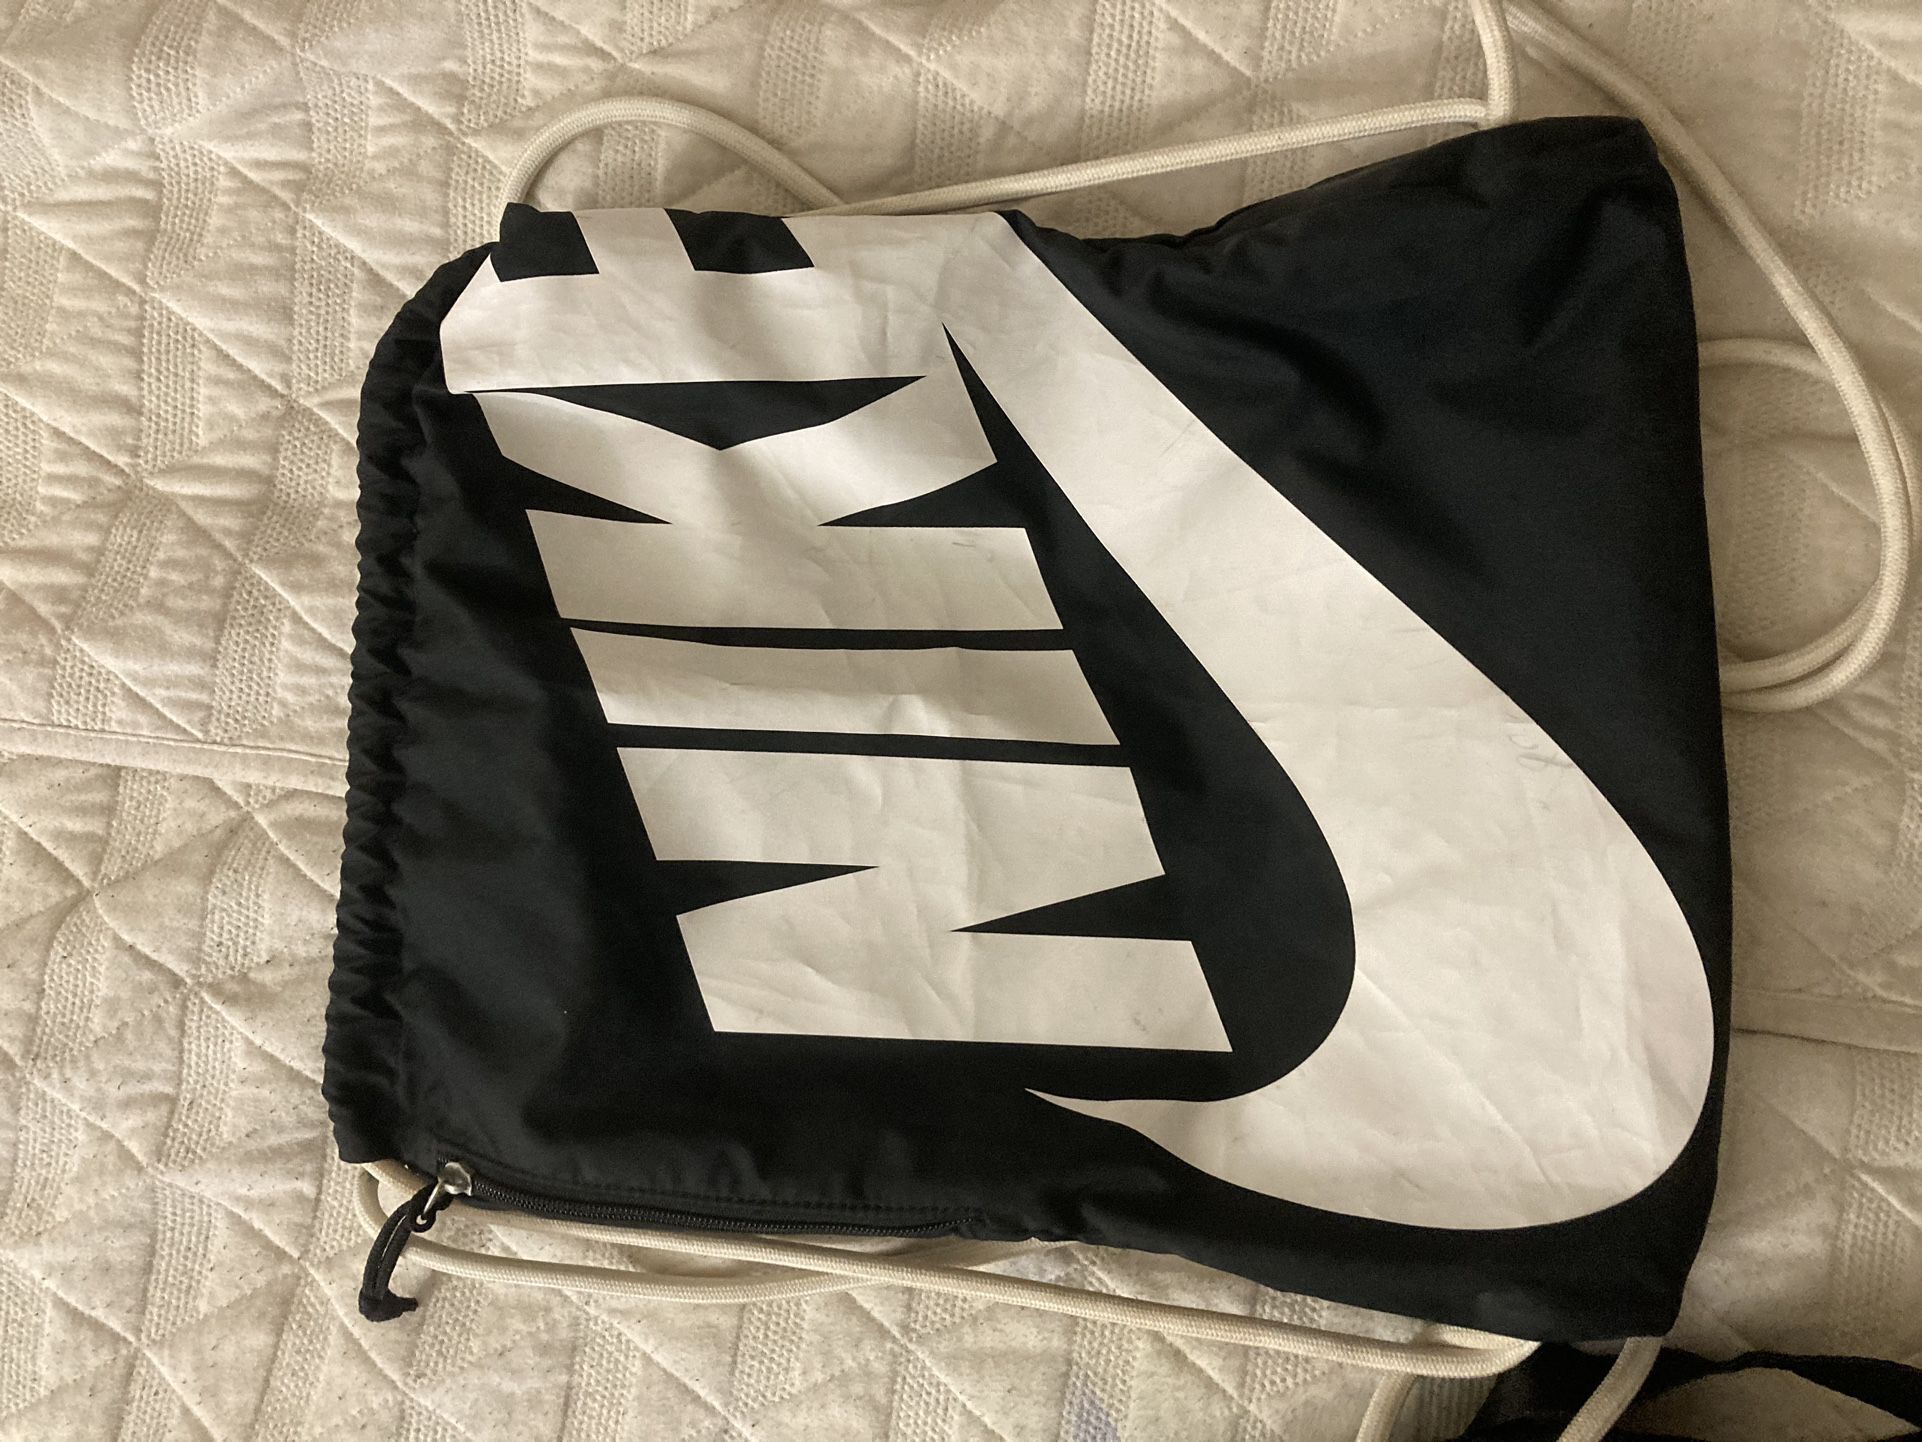 Nike Drawstring Backpack 